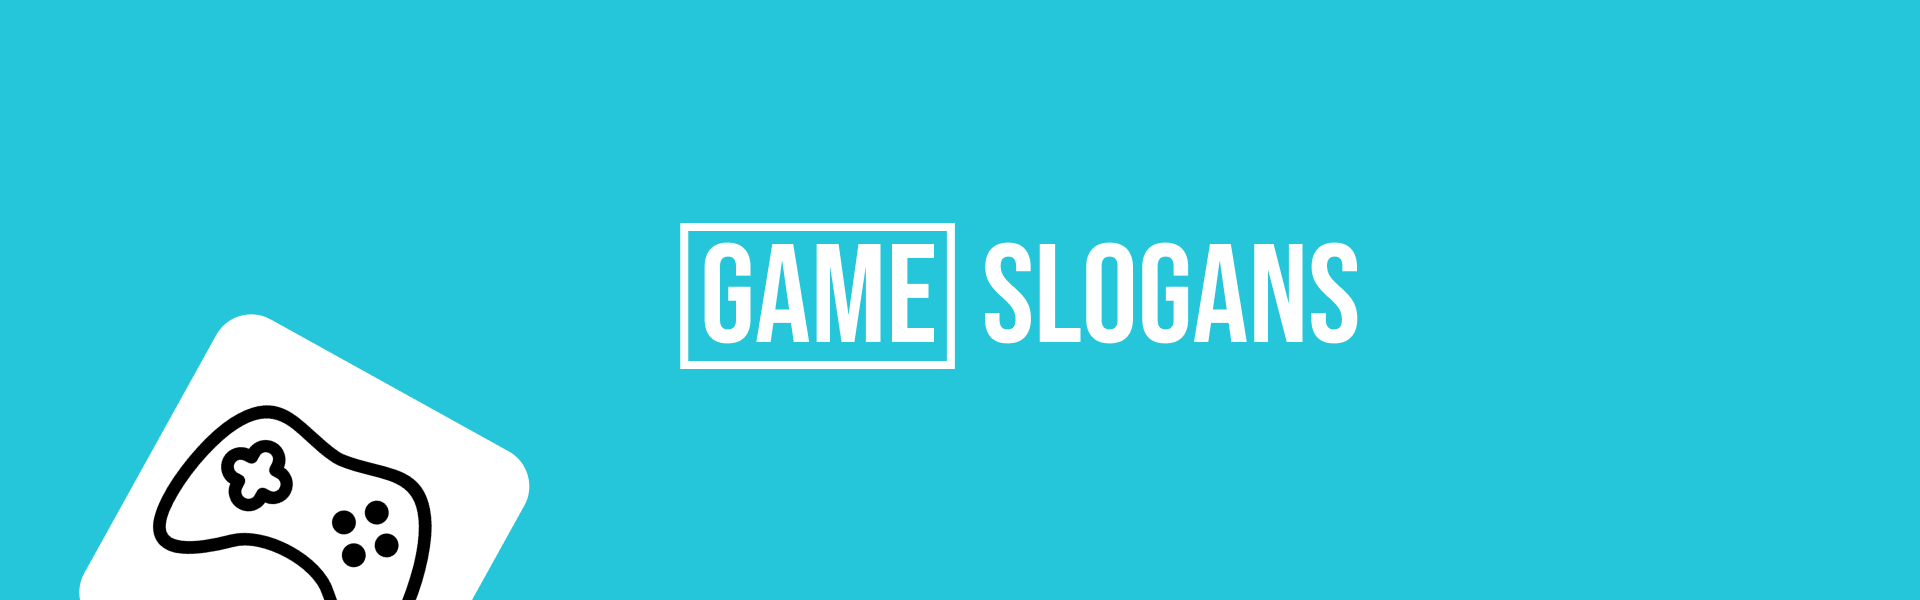 game-slogans-featured